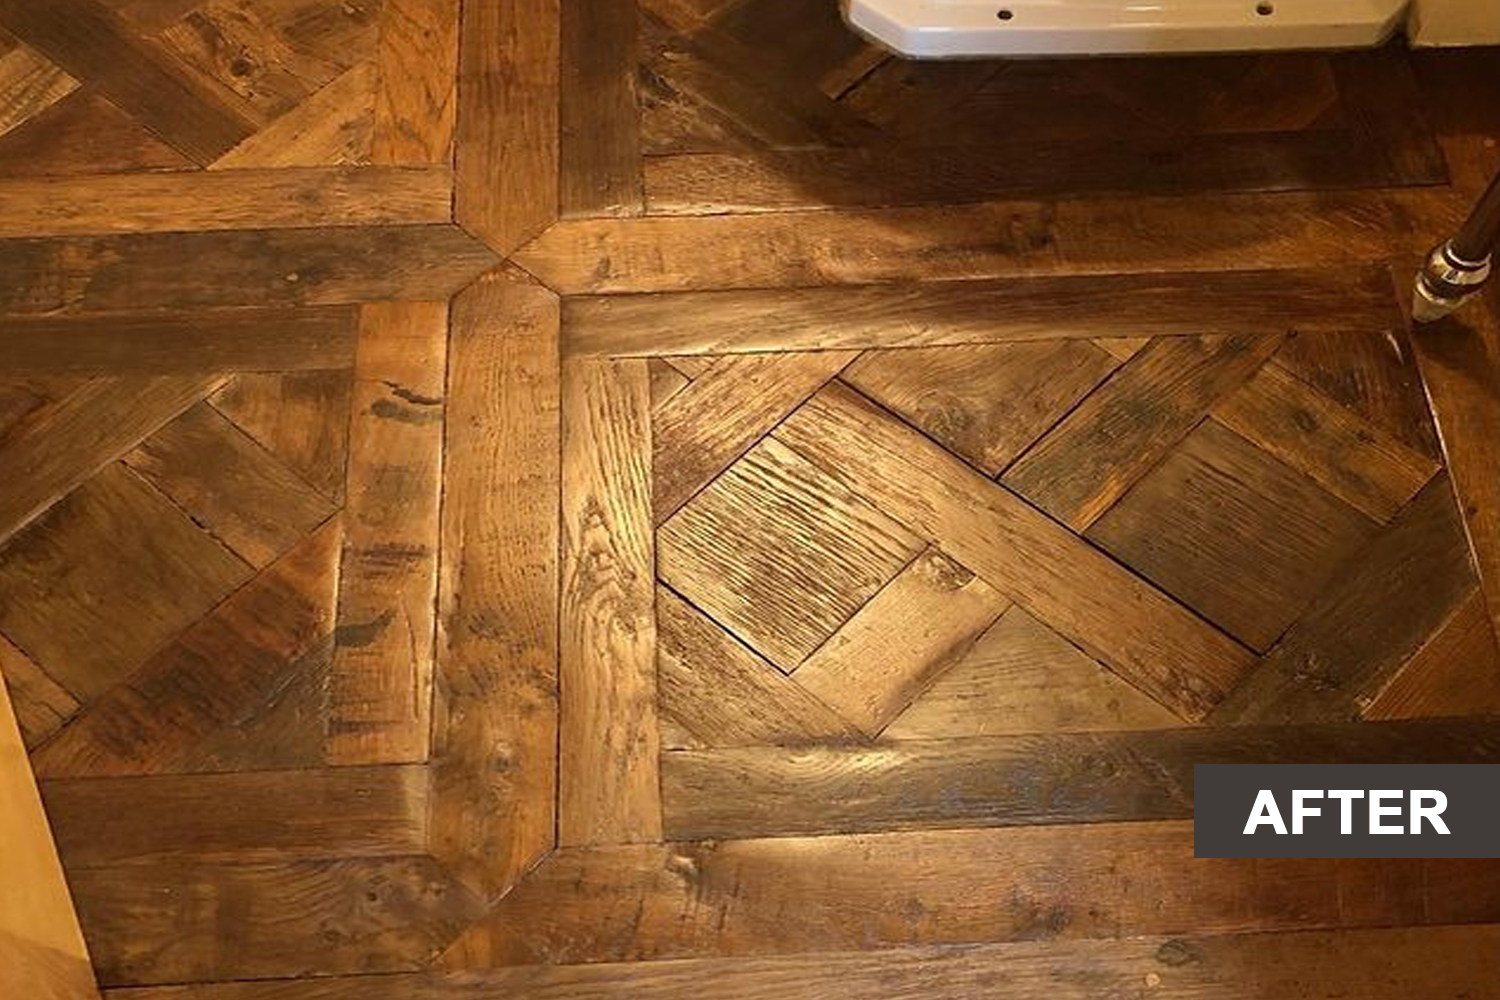 Wooden floor after restoration